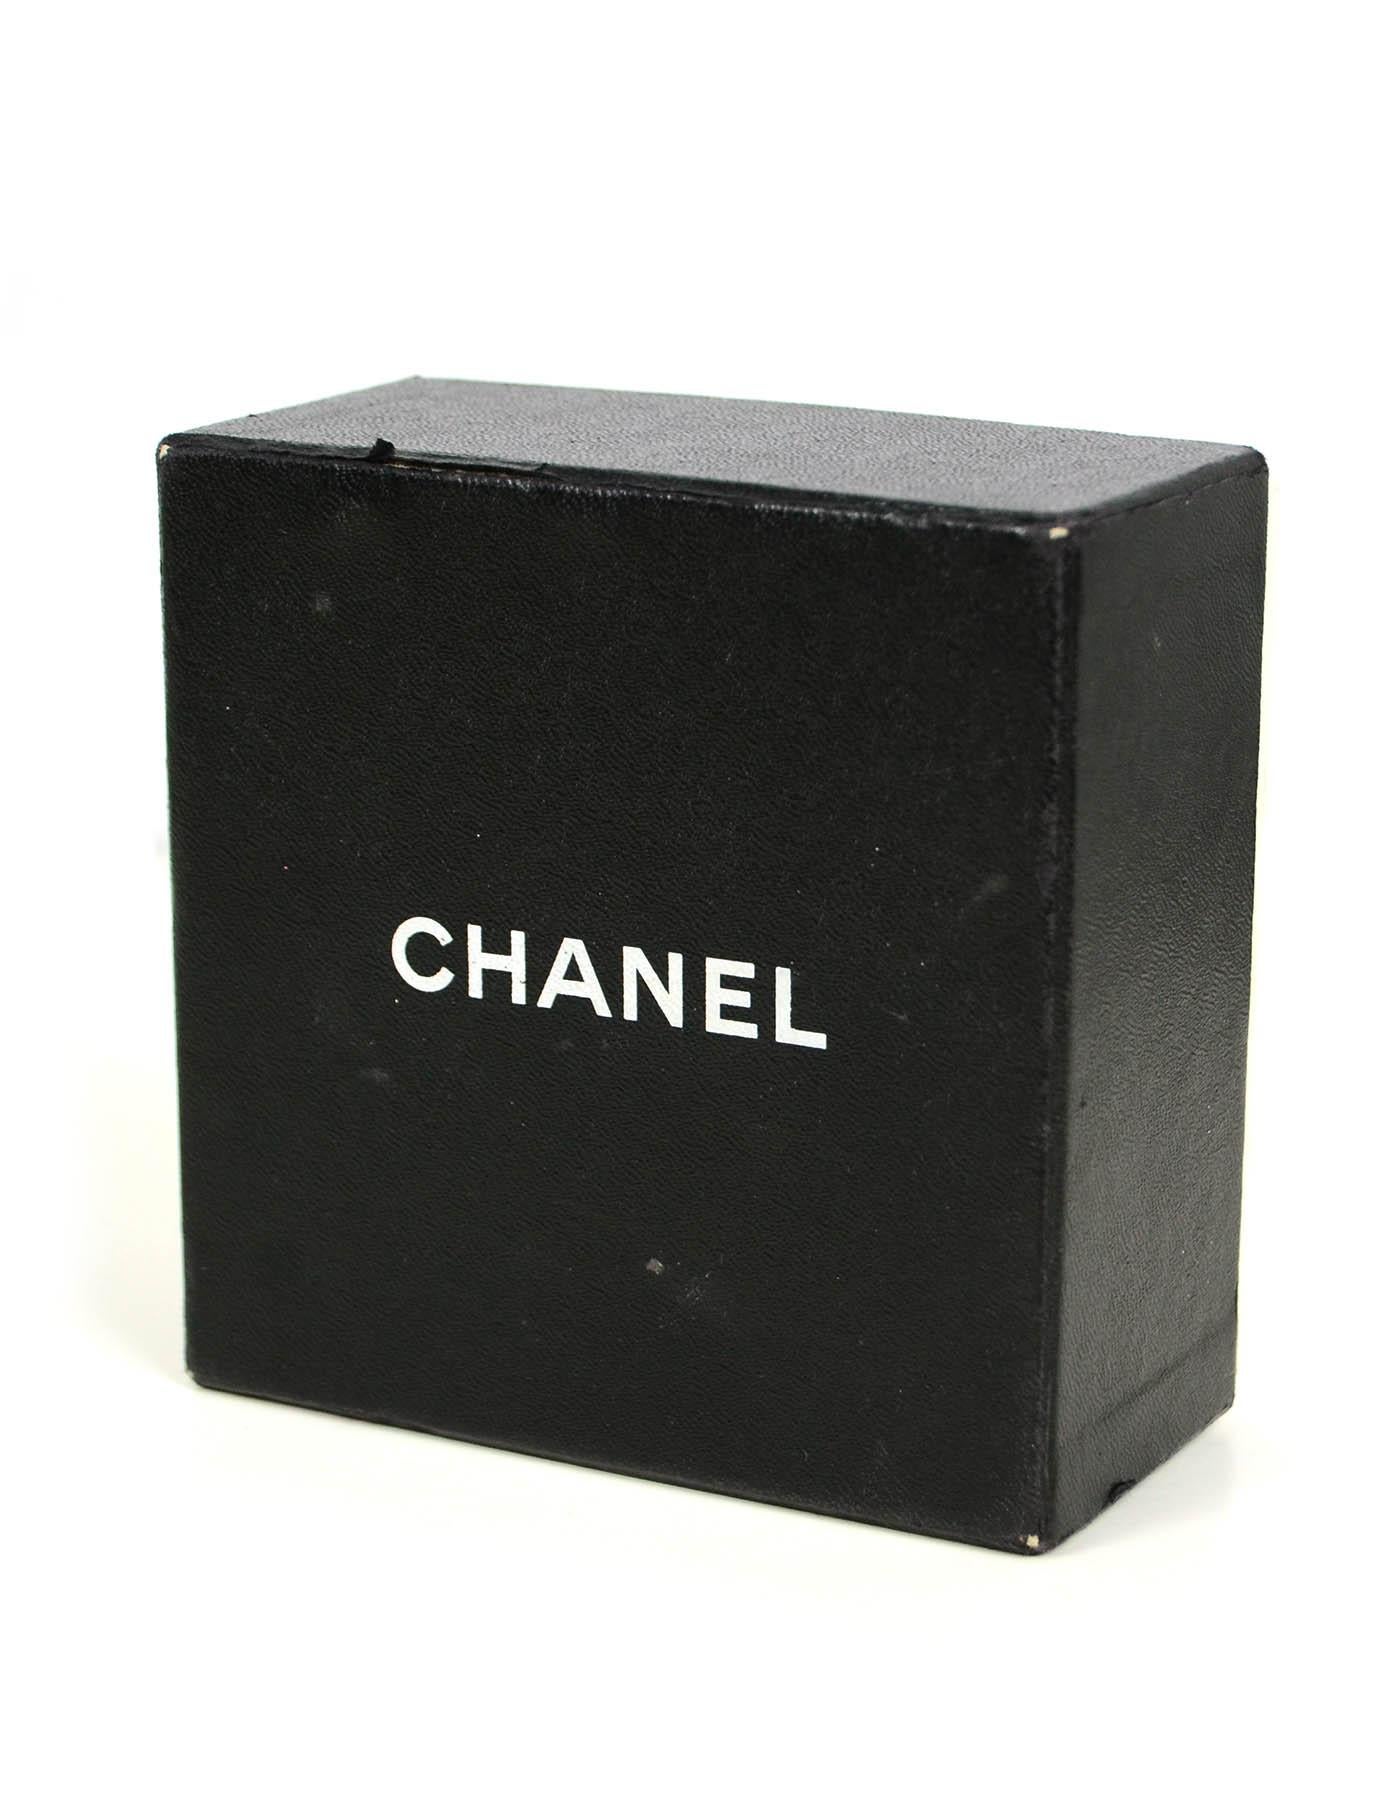 Chanel RARE COLLECTOR'S 1993 Iconic Vintage Gold CC Key Charm Bracelet 2